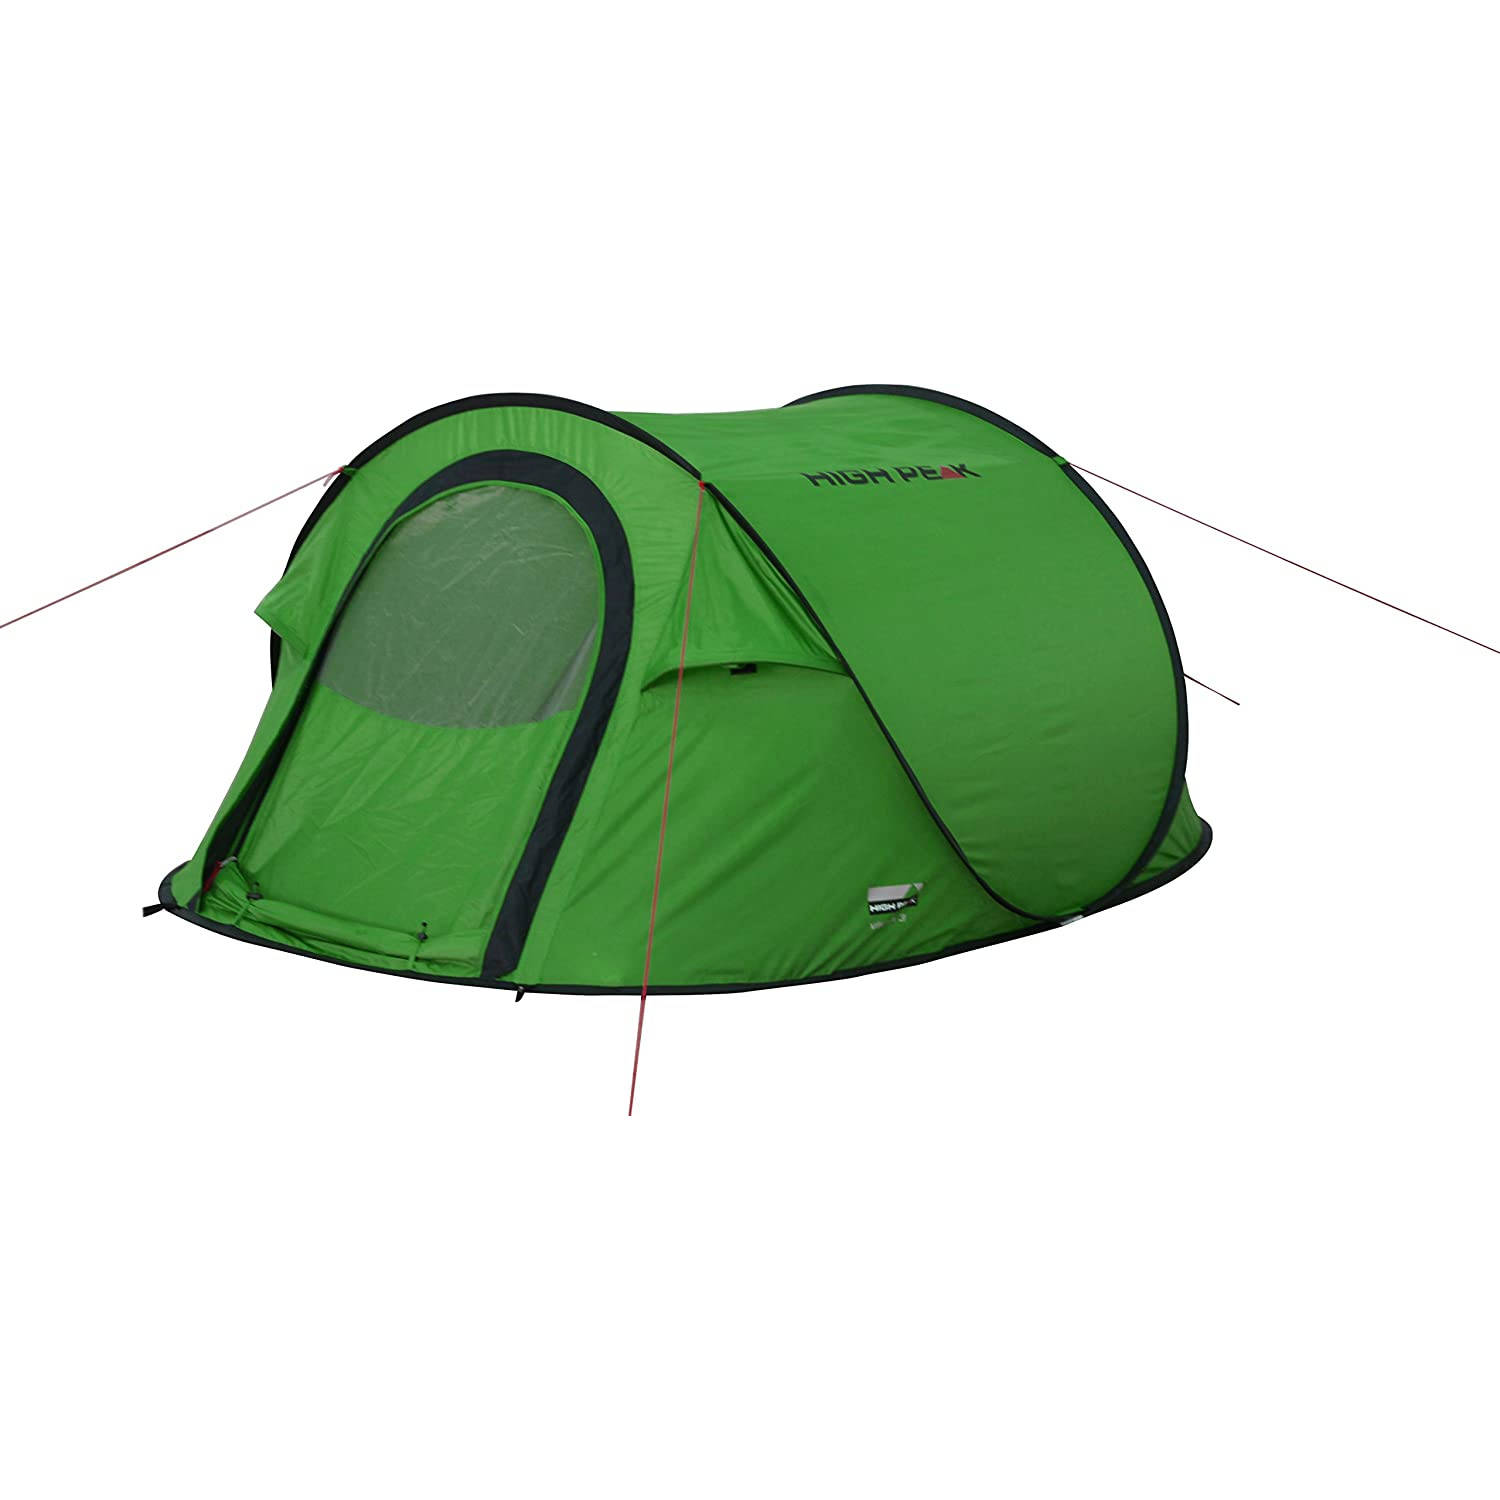 Industrialiseren domein Botanist High Peak pop-up tent Vision III 180 x 235 cm polyester groen | Blokker